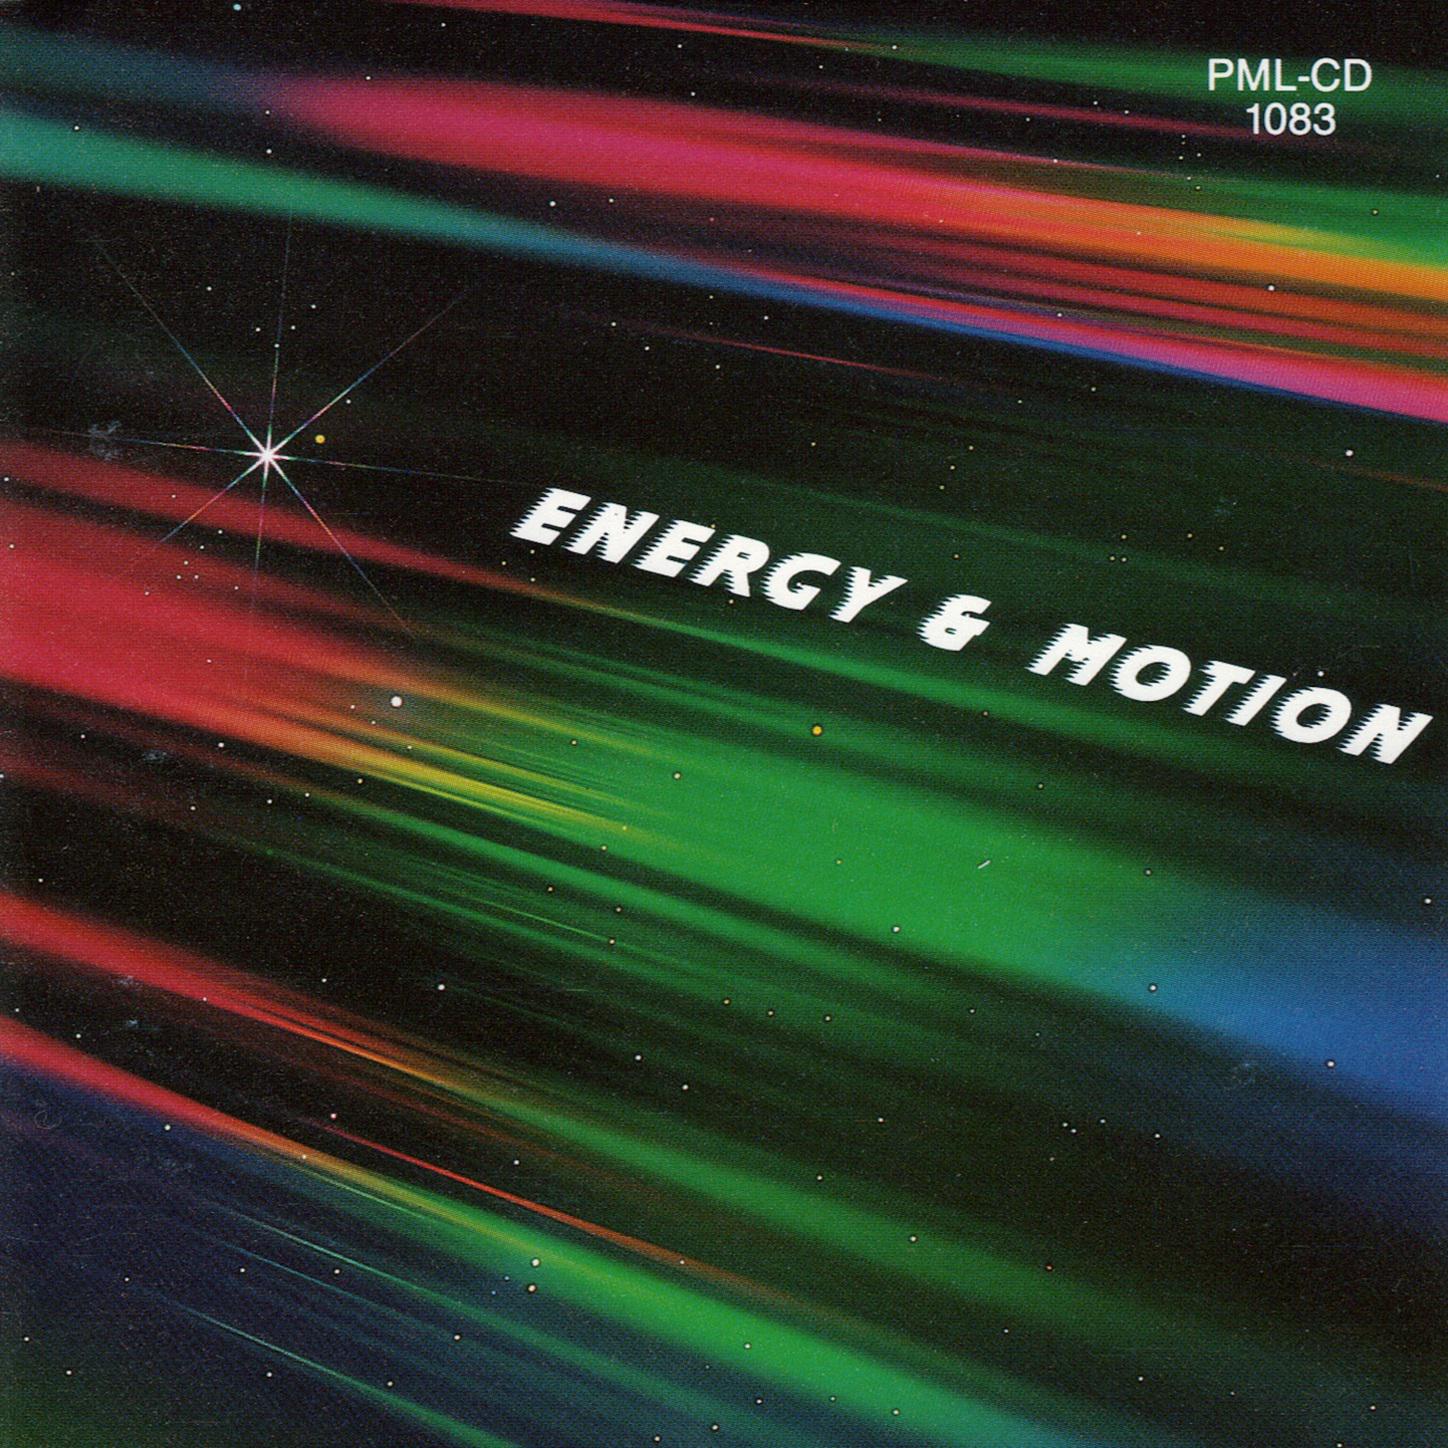 Energy & Motion